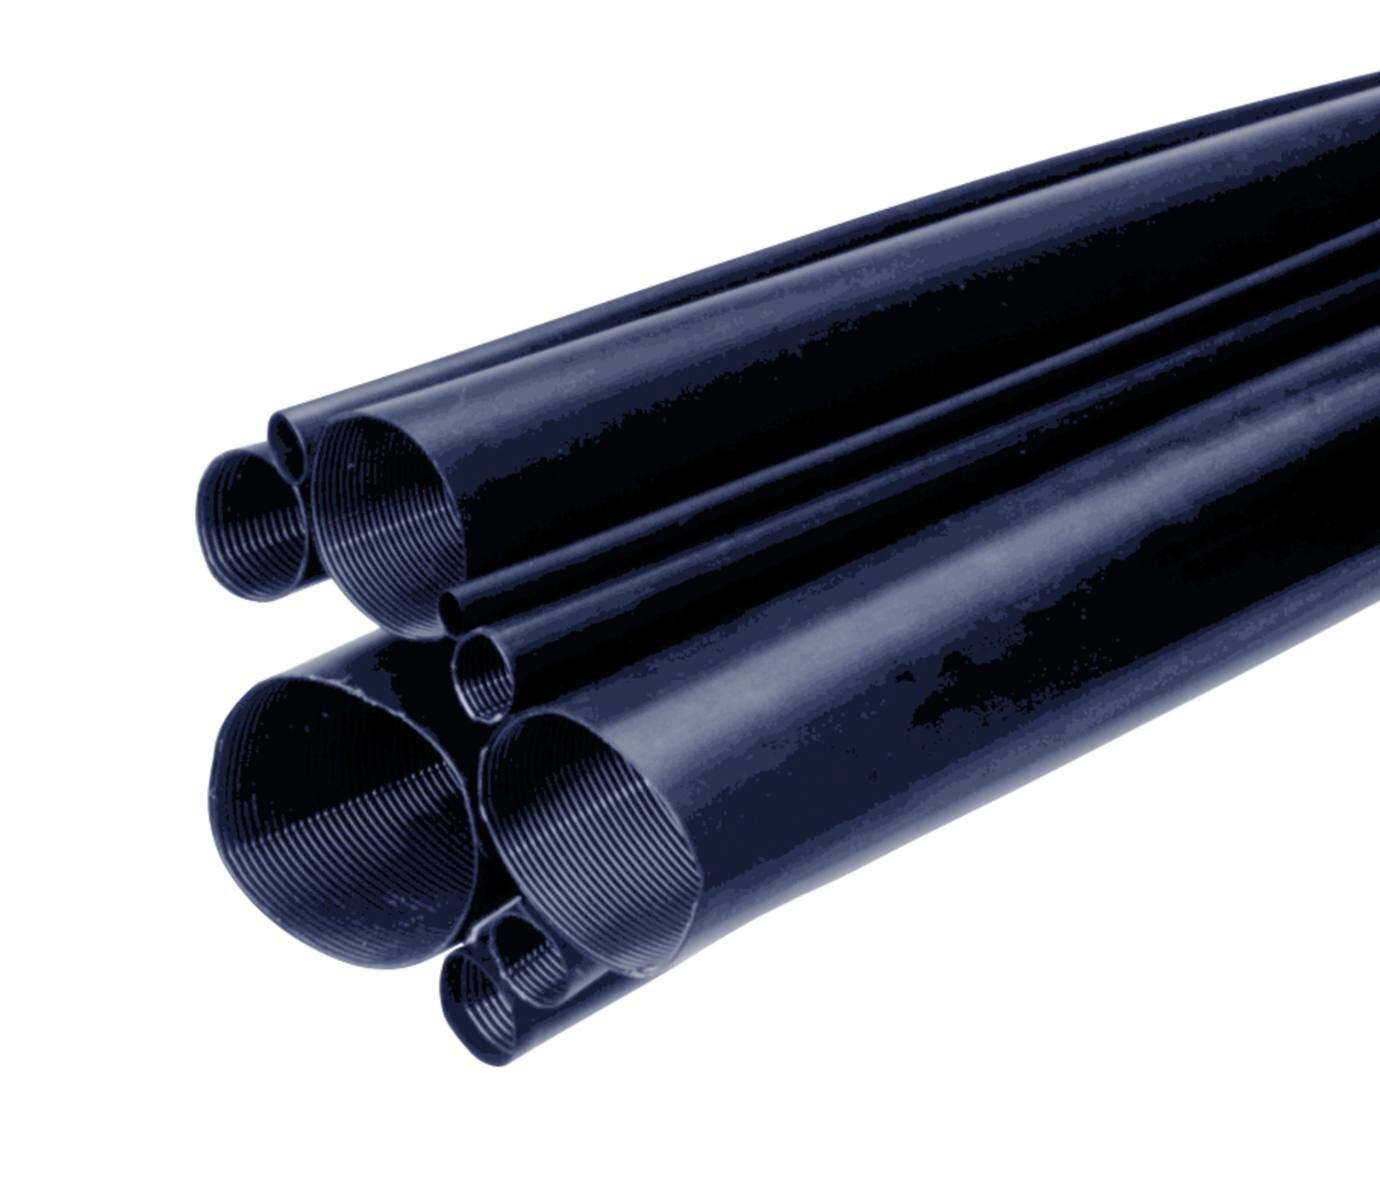 3M MDT-A Medium-wall heat-shrink tubing with adhesive, black, 38/12 mm, 1 m